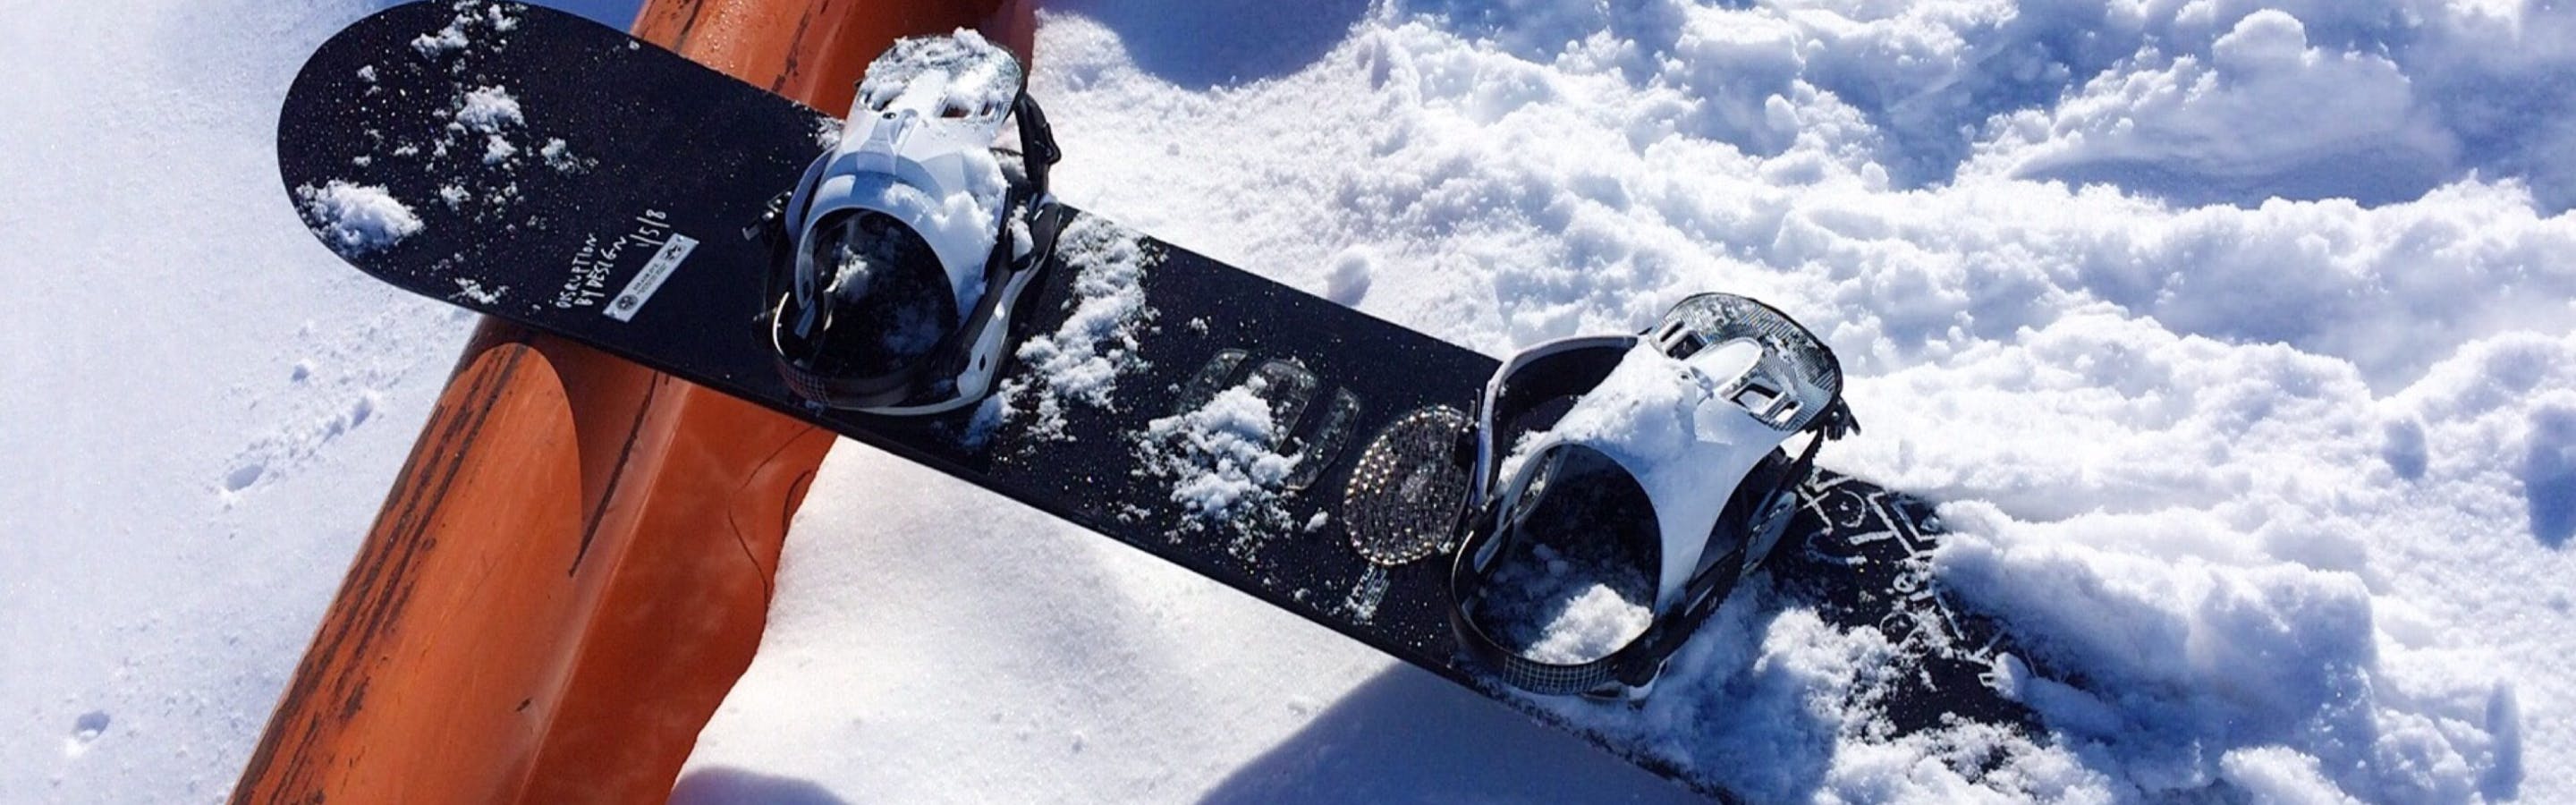 Ride Snowboard Bindings - Disc Mounting Hardware Fixing Screws x 8